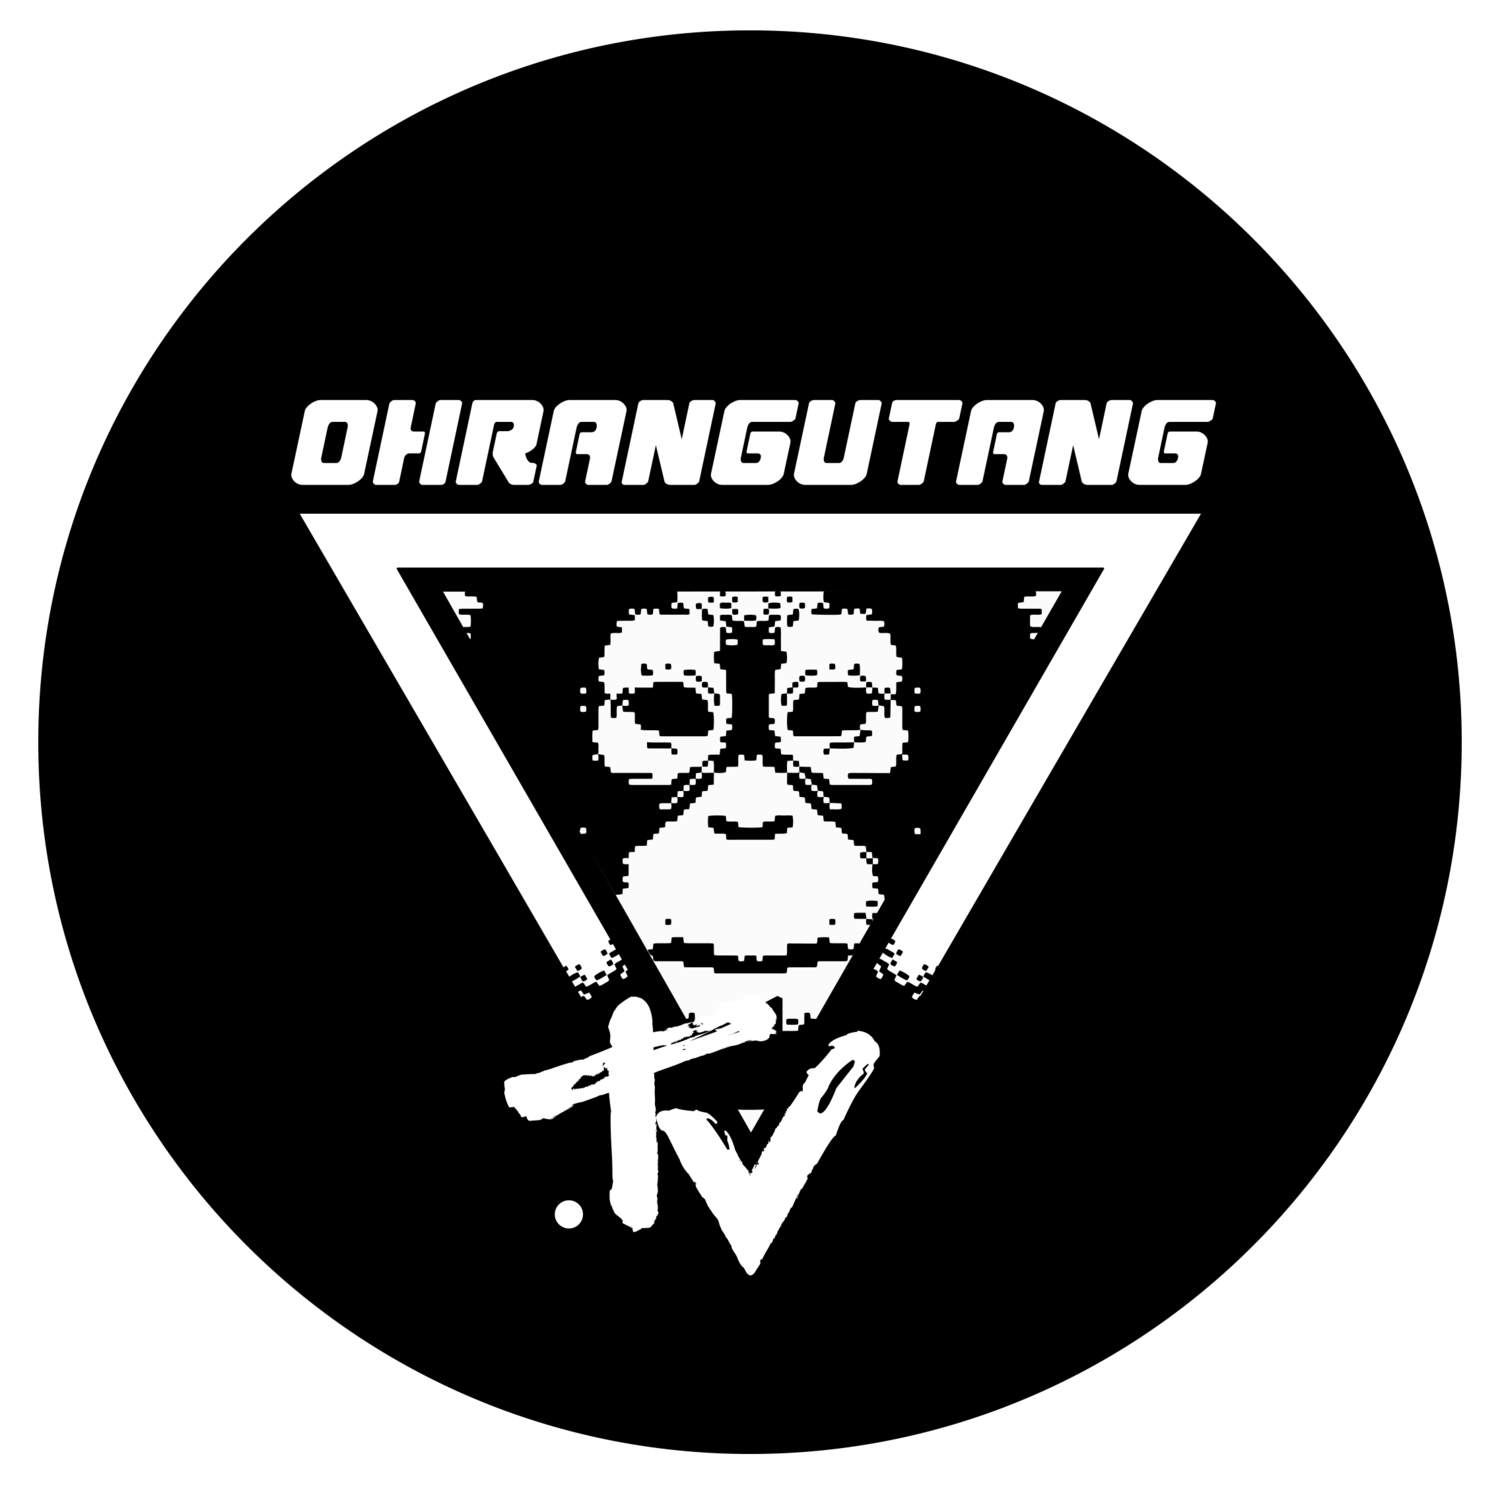 www.ohrangutang.tv